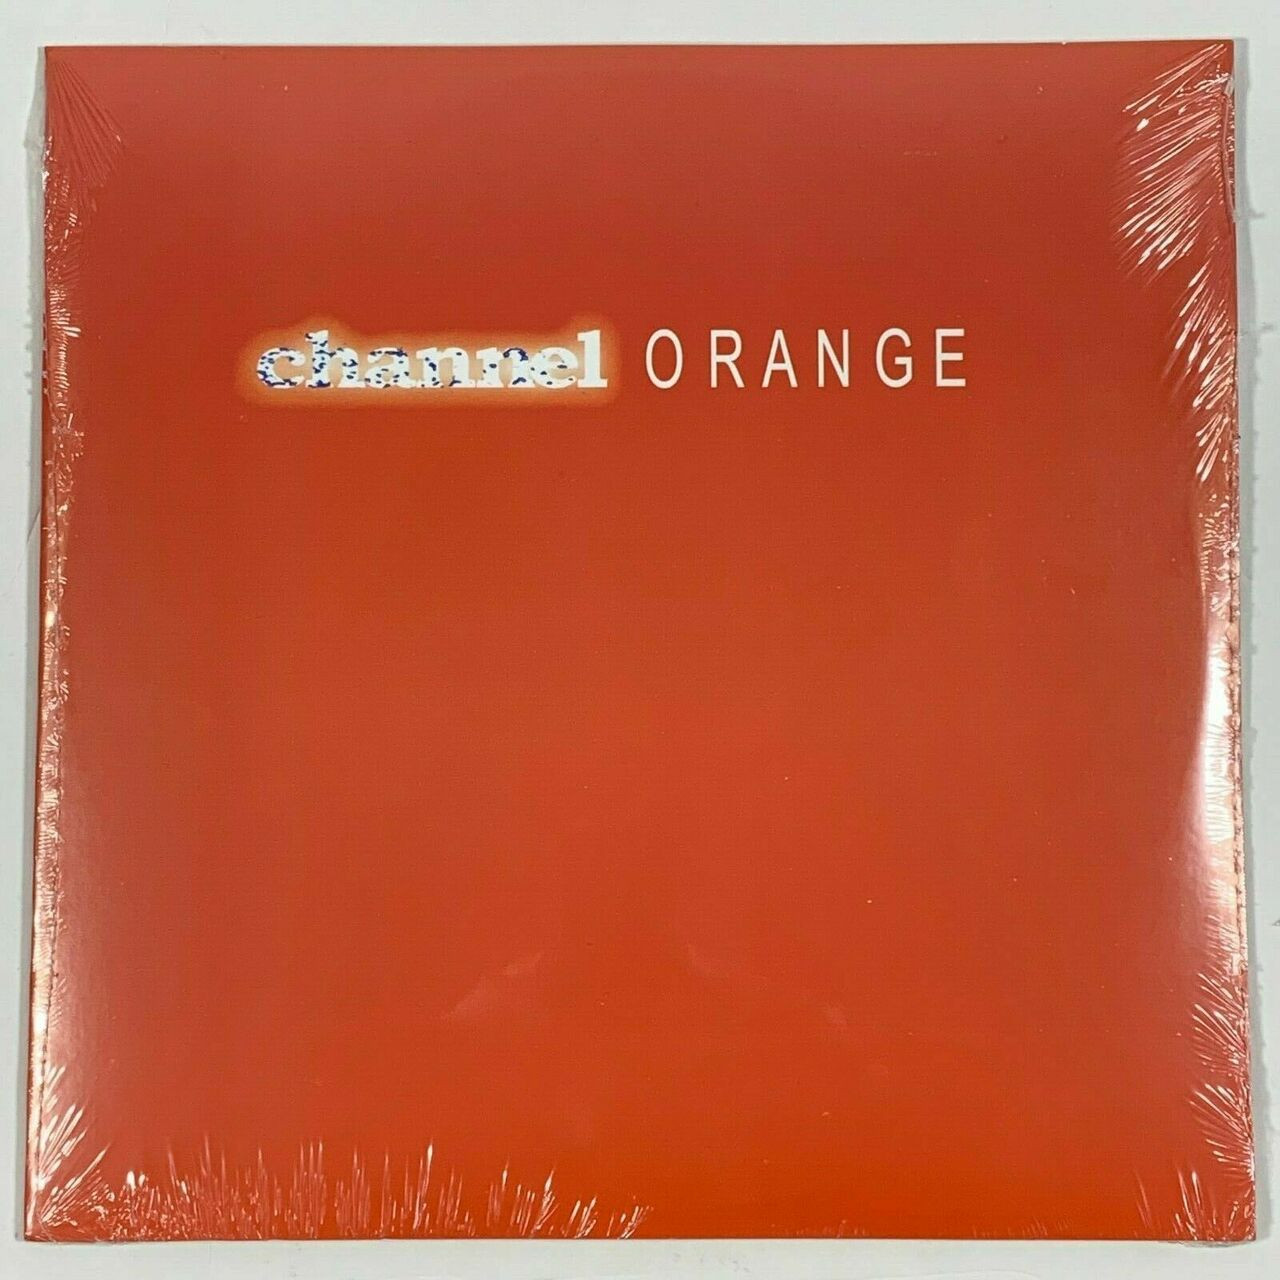 Frank Ocean Channel Orange 2LP Vinyl Limited Orange 12 Record